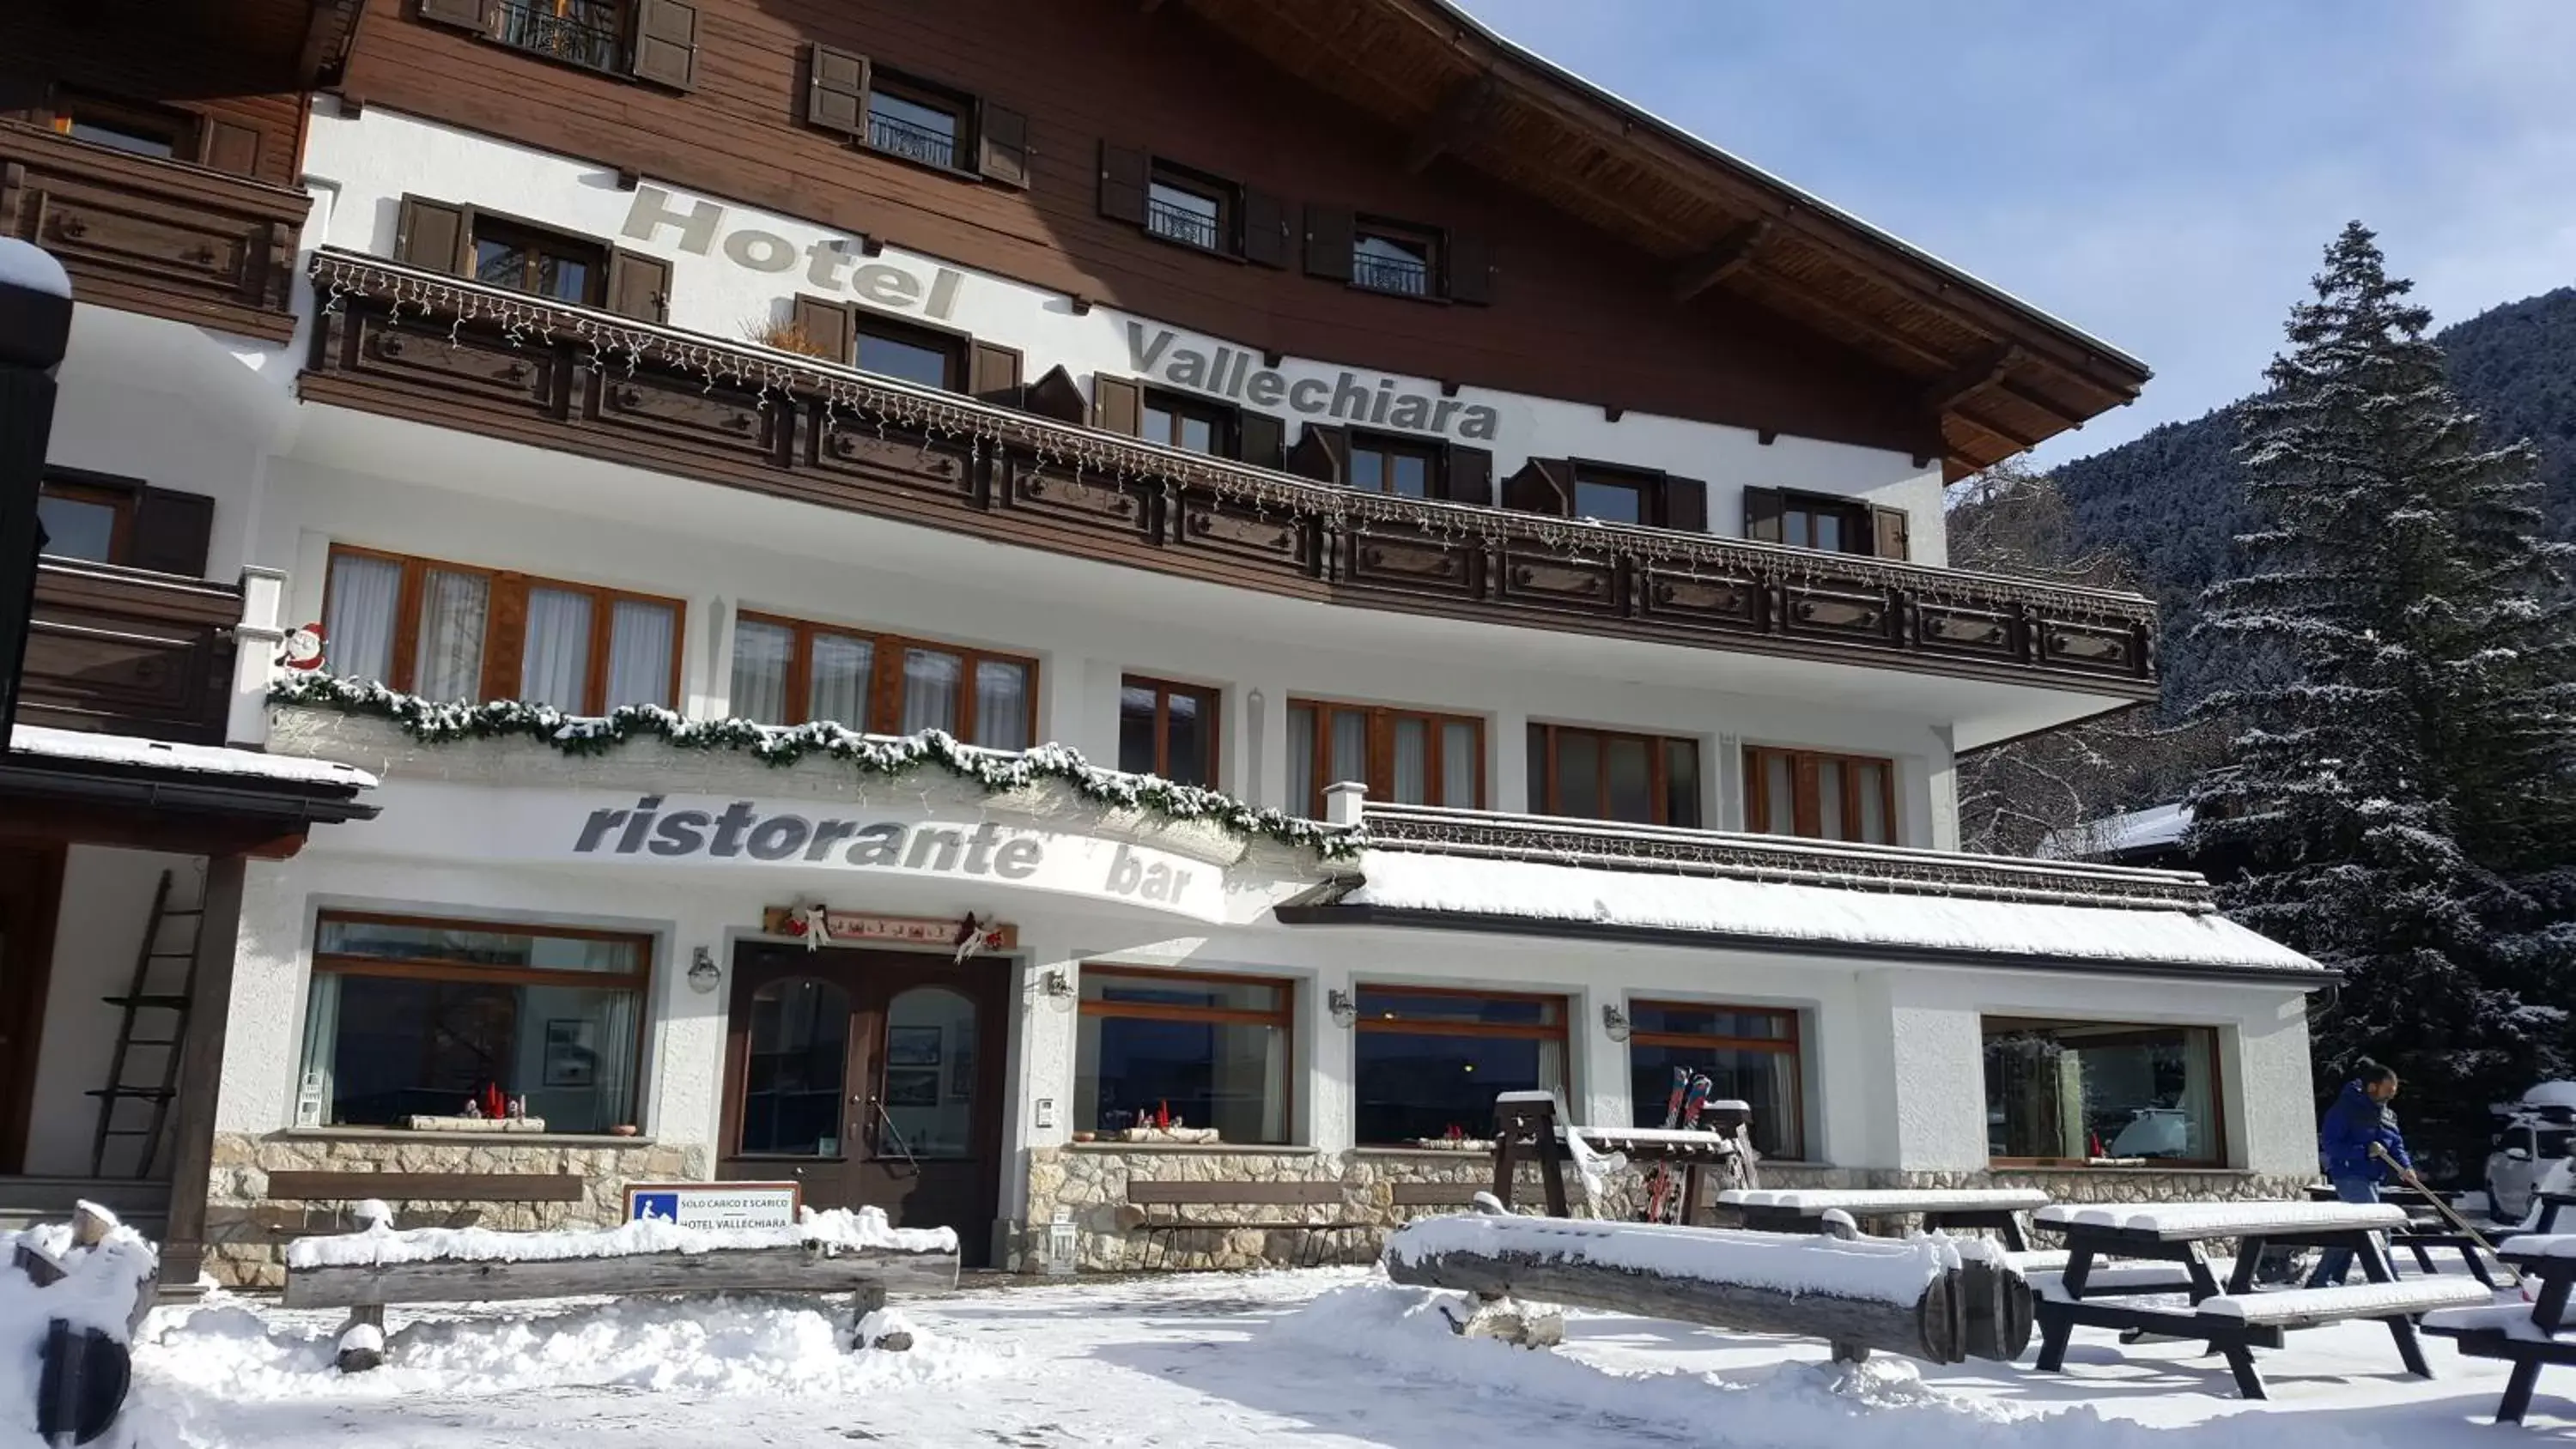 Winter in Hotel Vallechiara